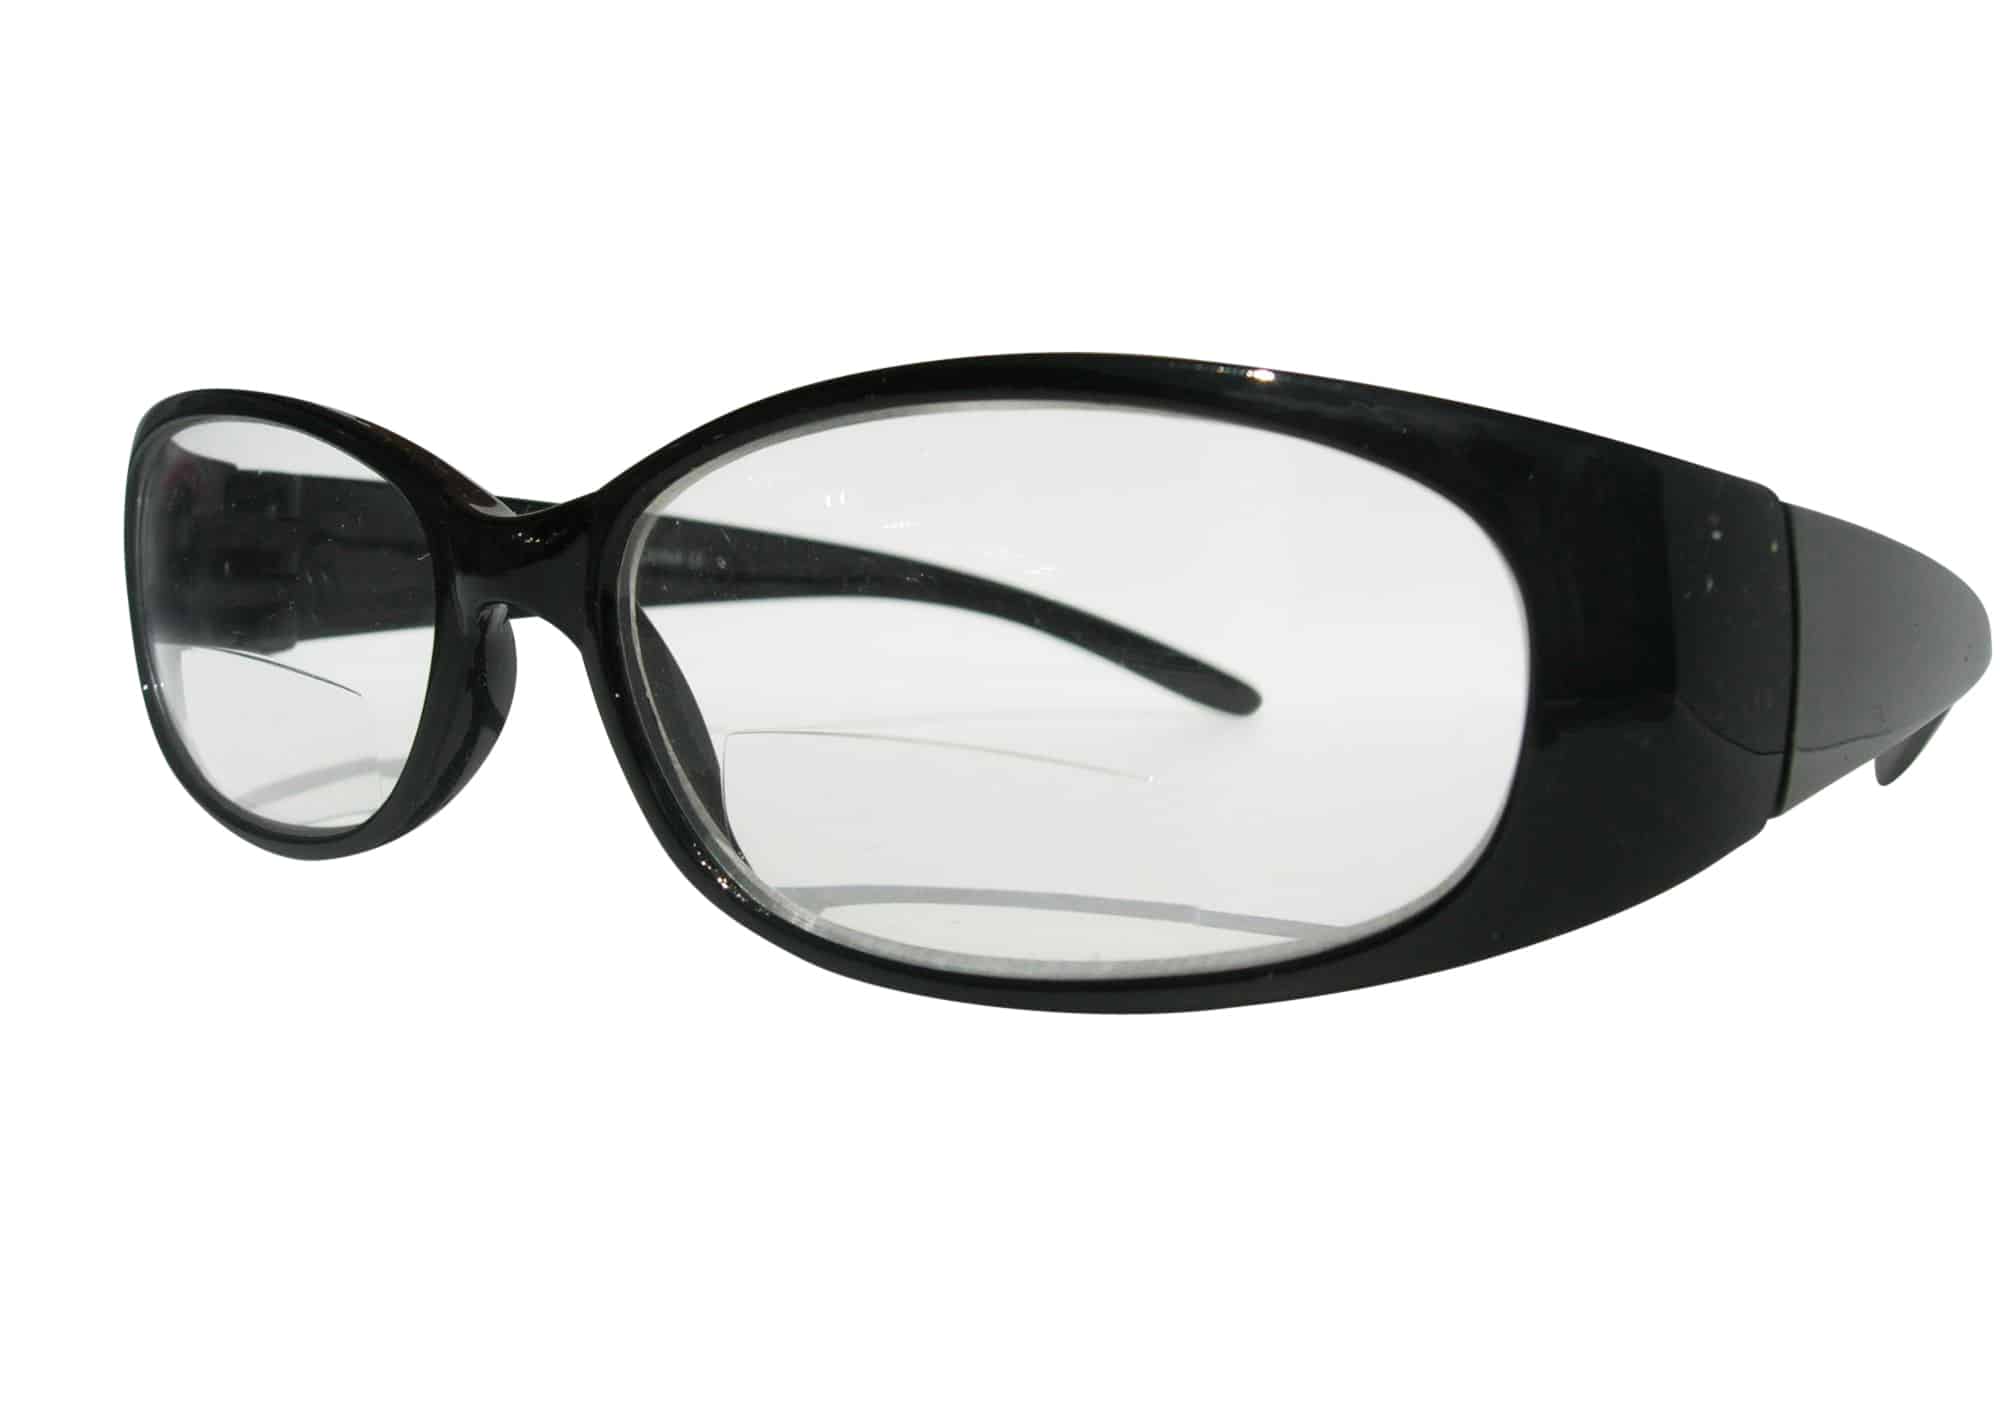 Reina Bifocal Reading Glasses in Black